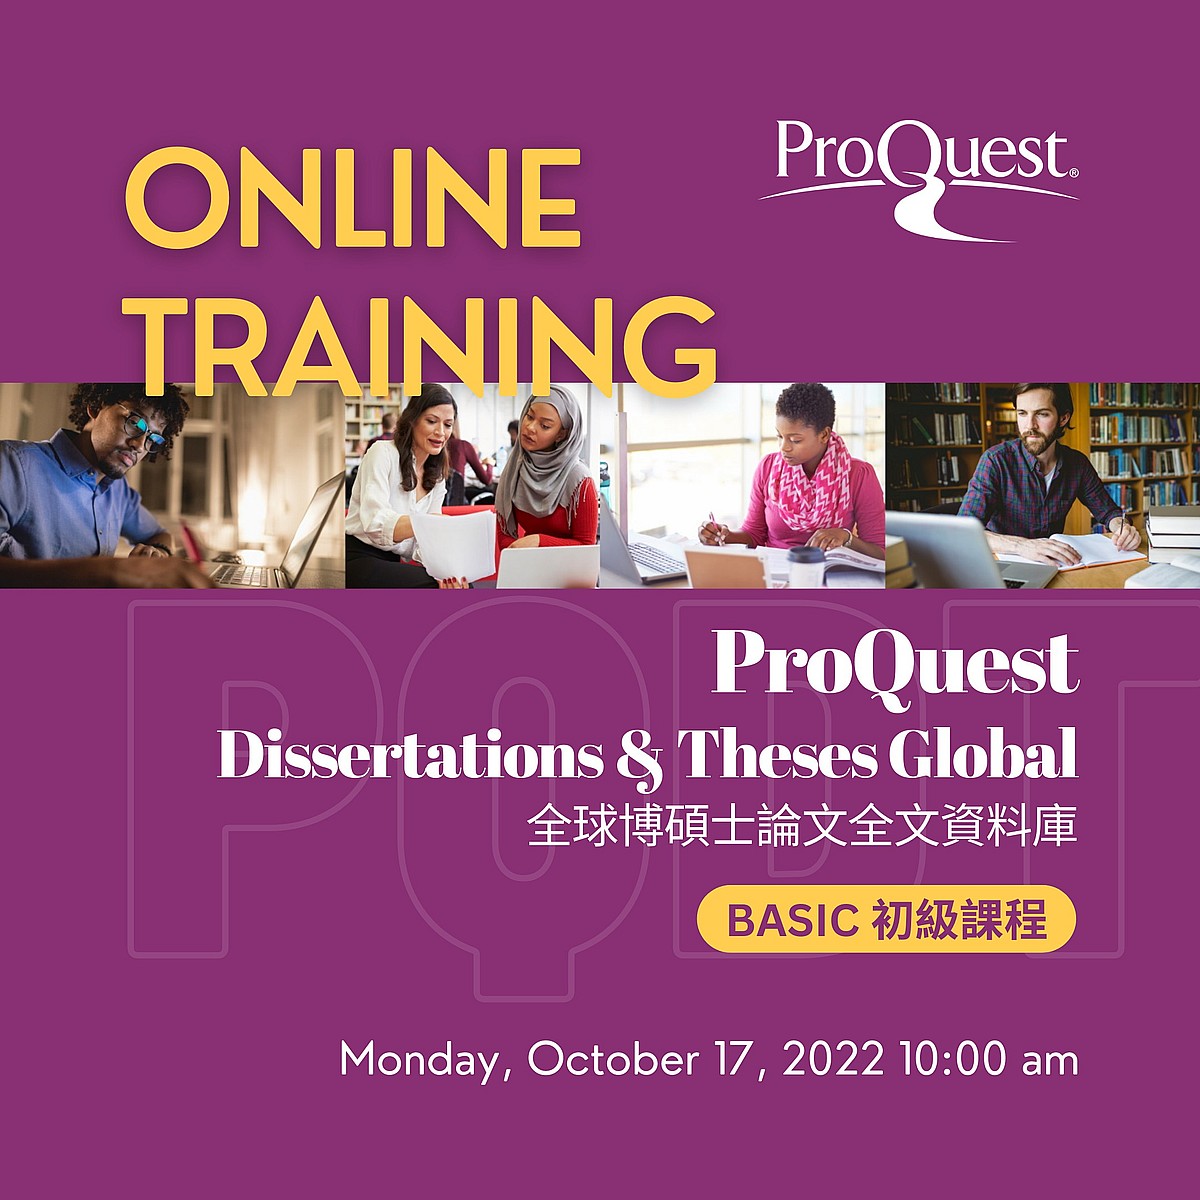 ProQuest Dissertations & Theses Global 全球博碩士論文全文資料庫線上教育訓練課程: 初期課程